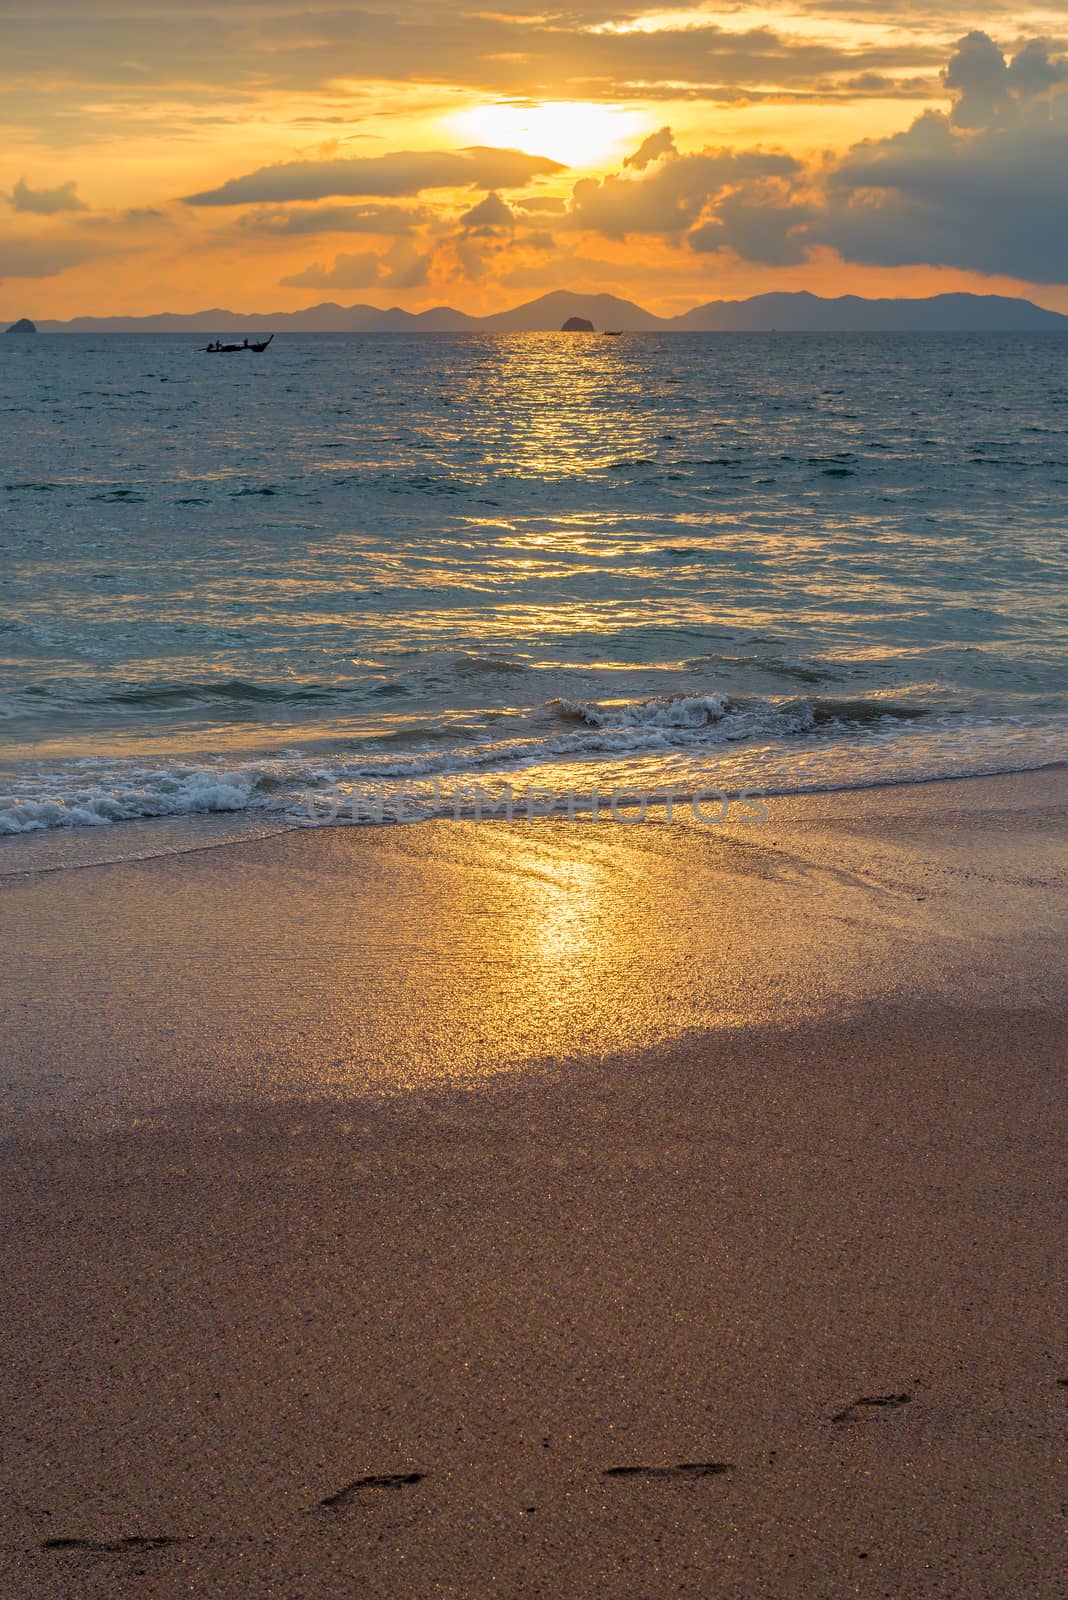 sandy beach, calm sea, cumulus clouds and beautiful orange sunset over the sea